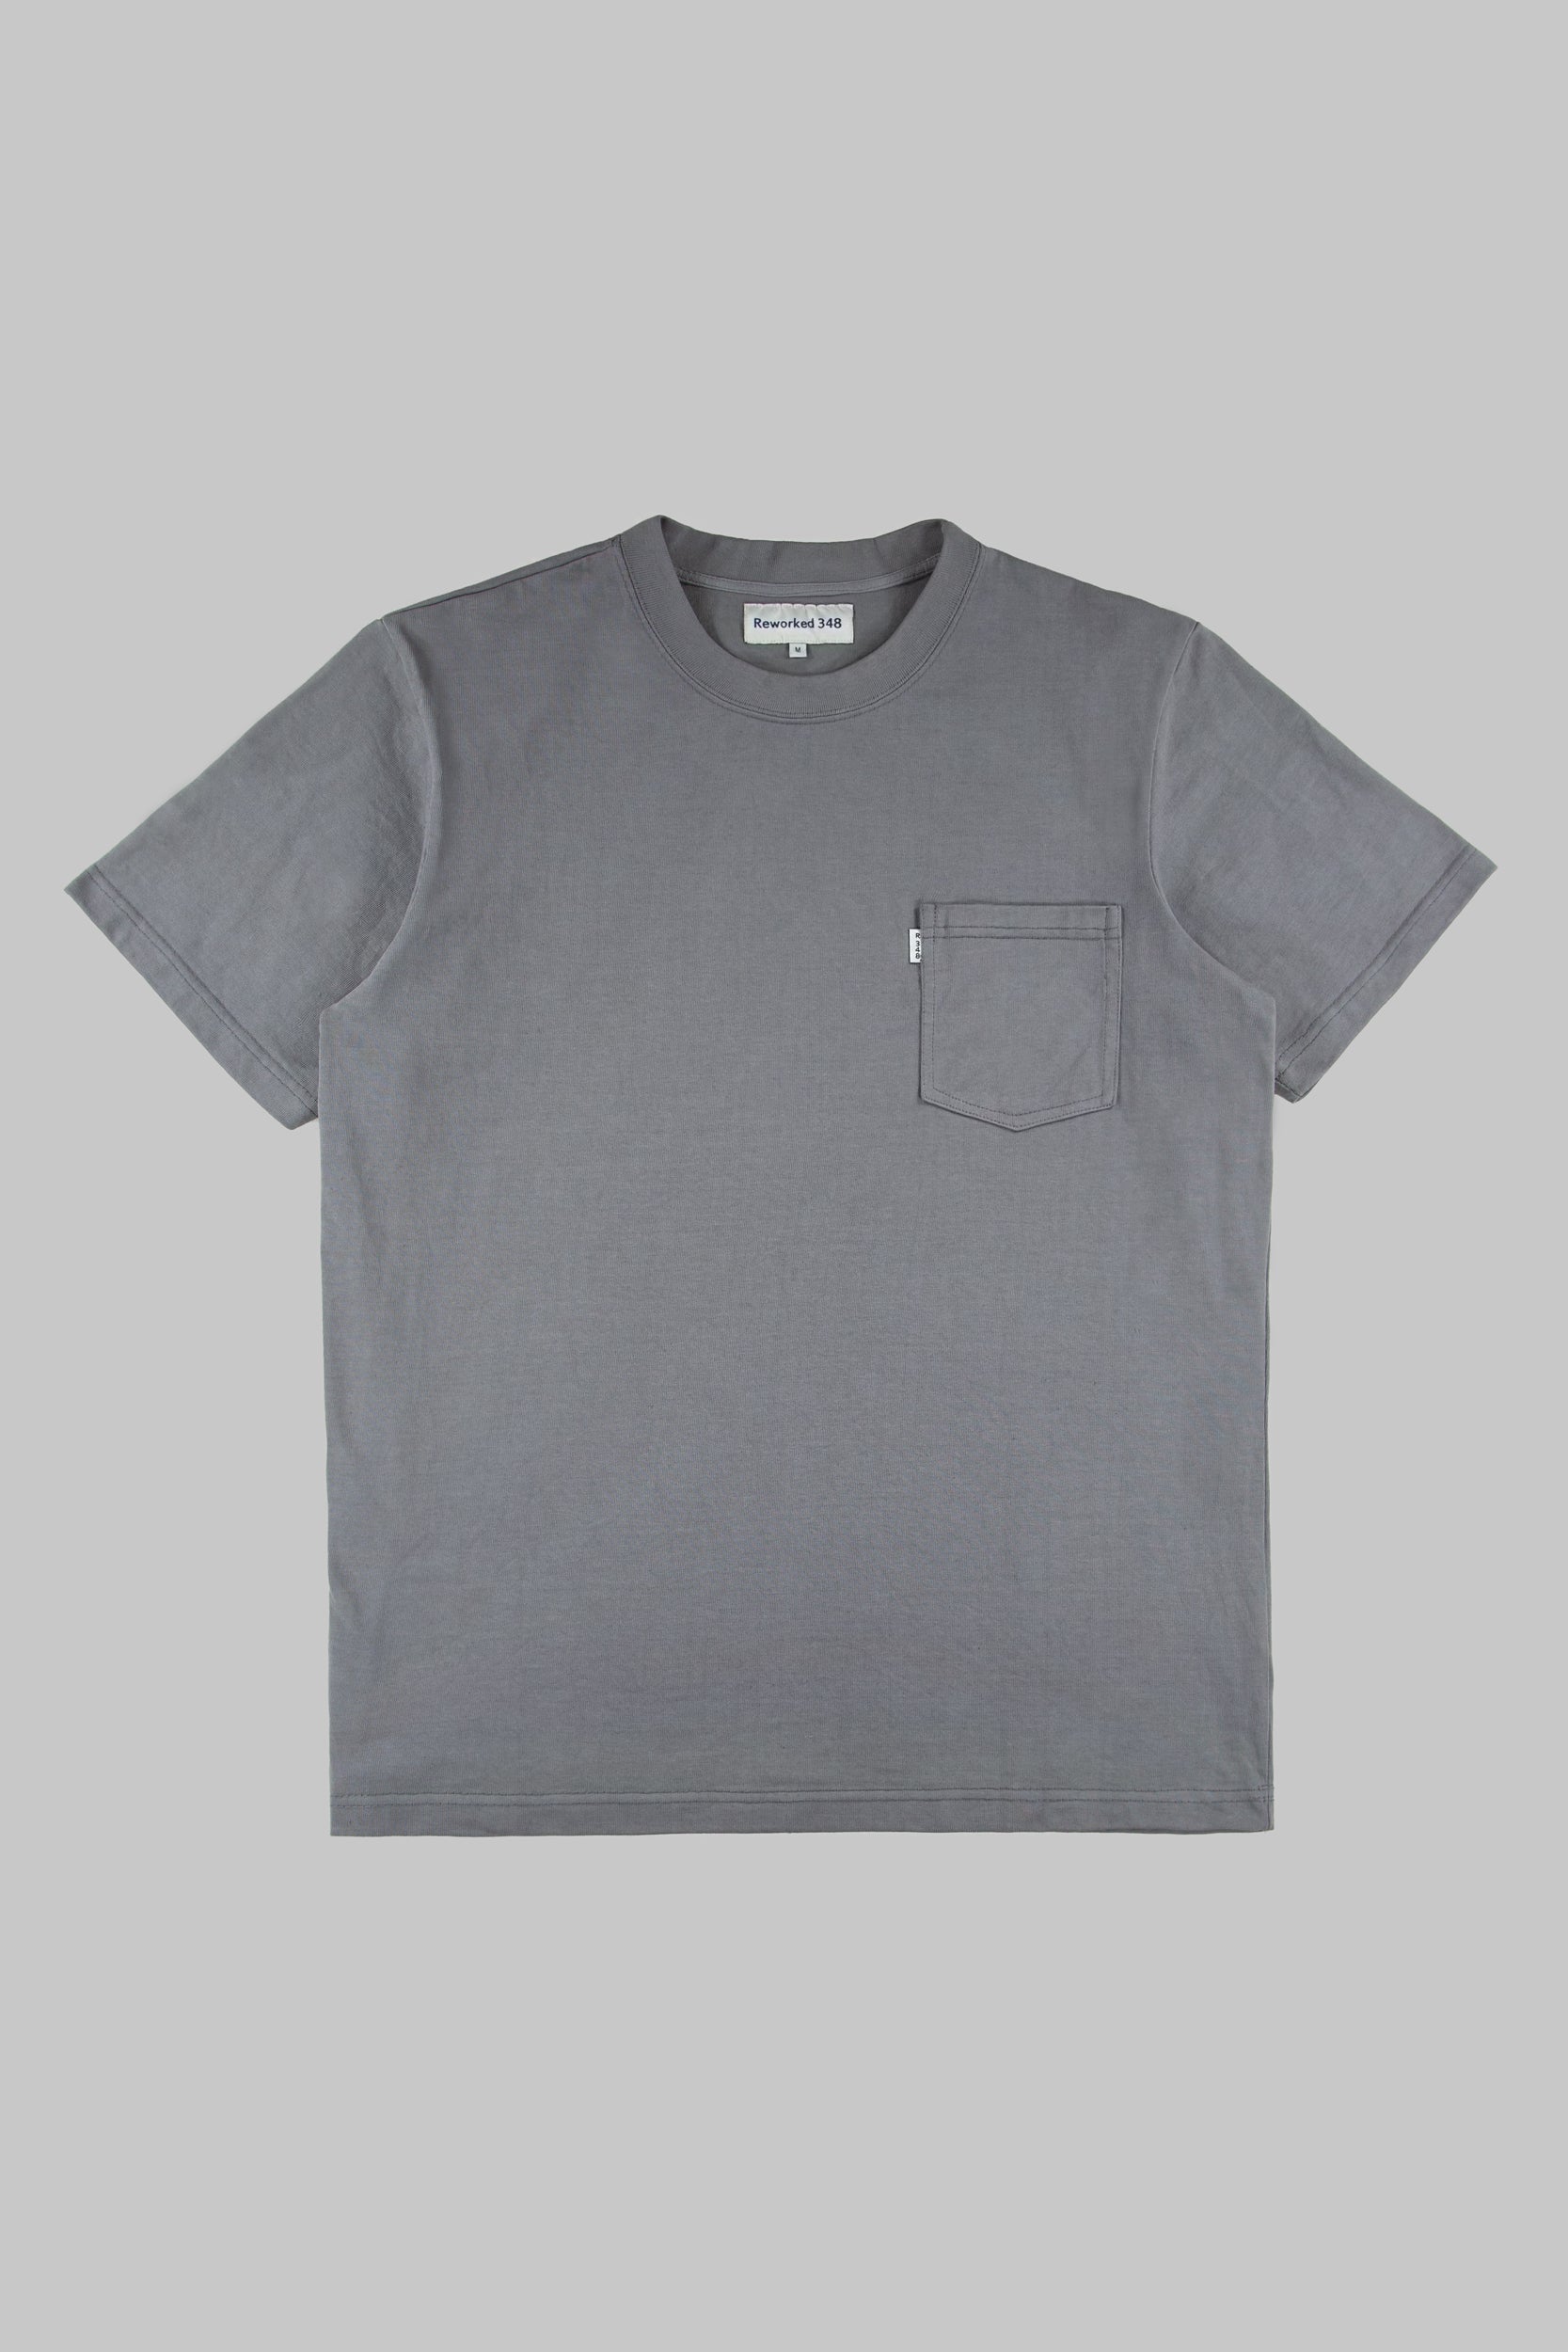 Pocket T-Shirt Steel Grey